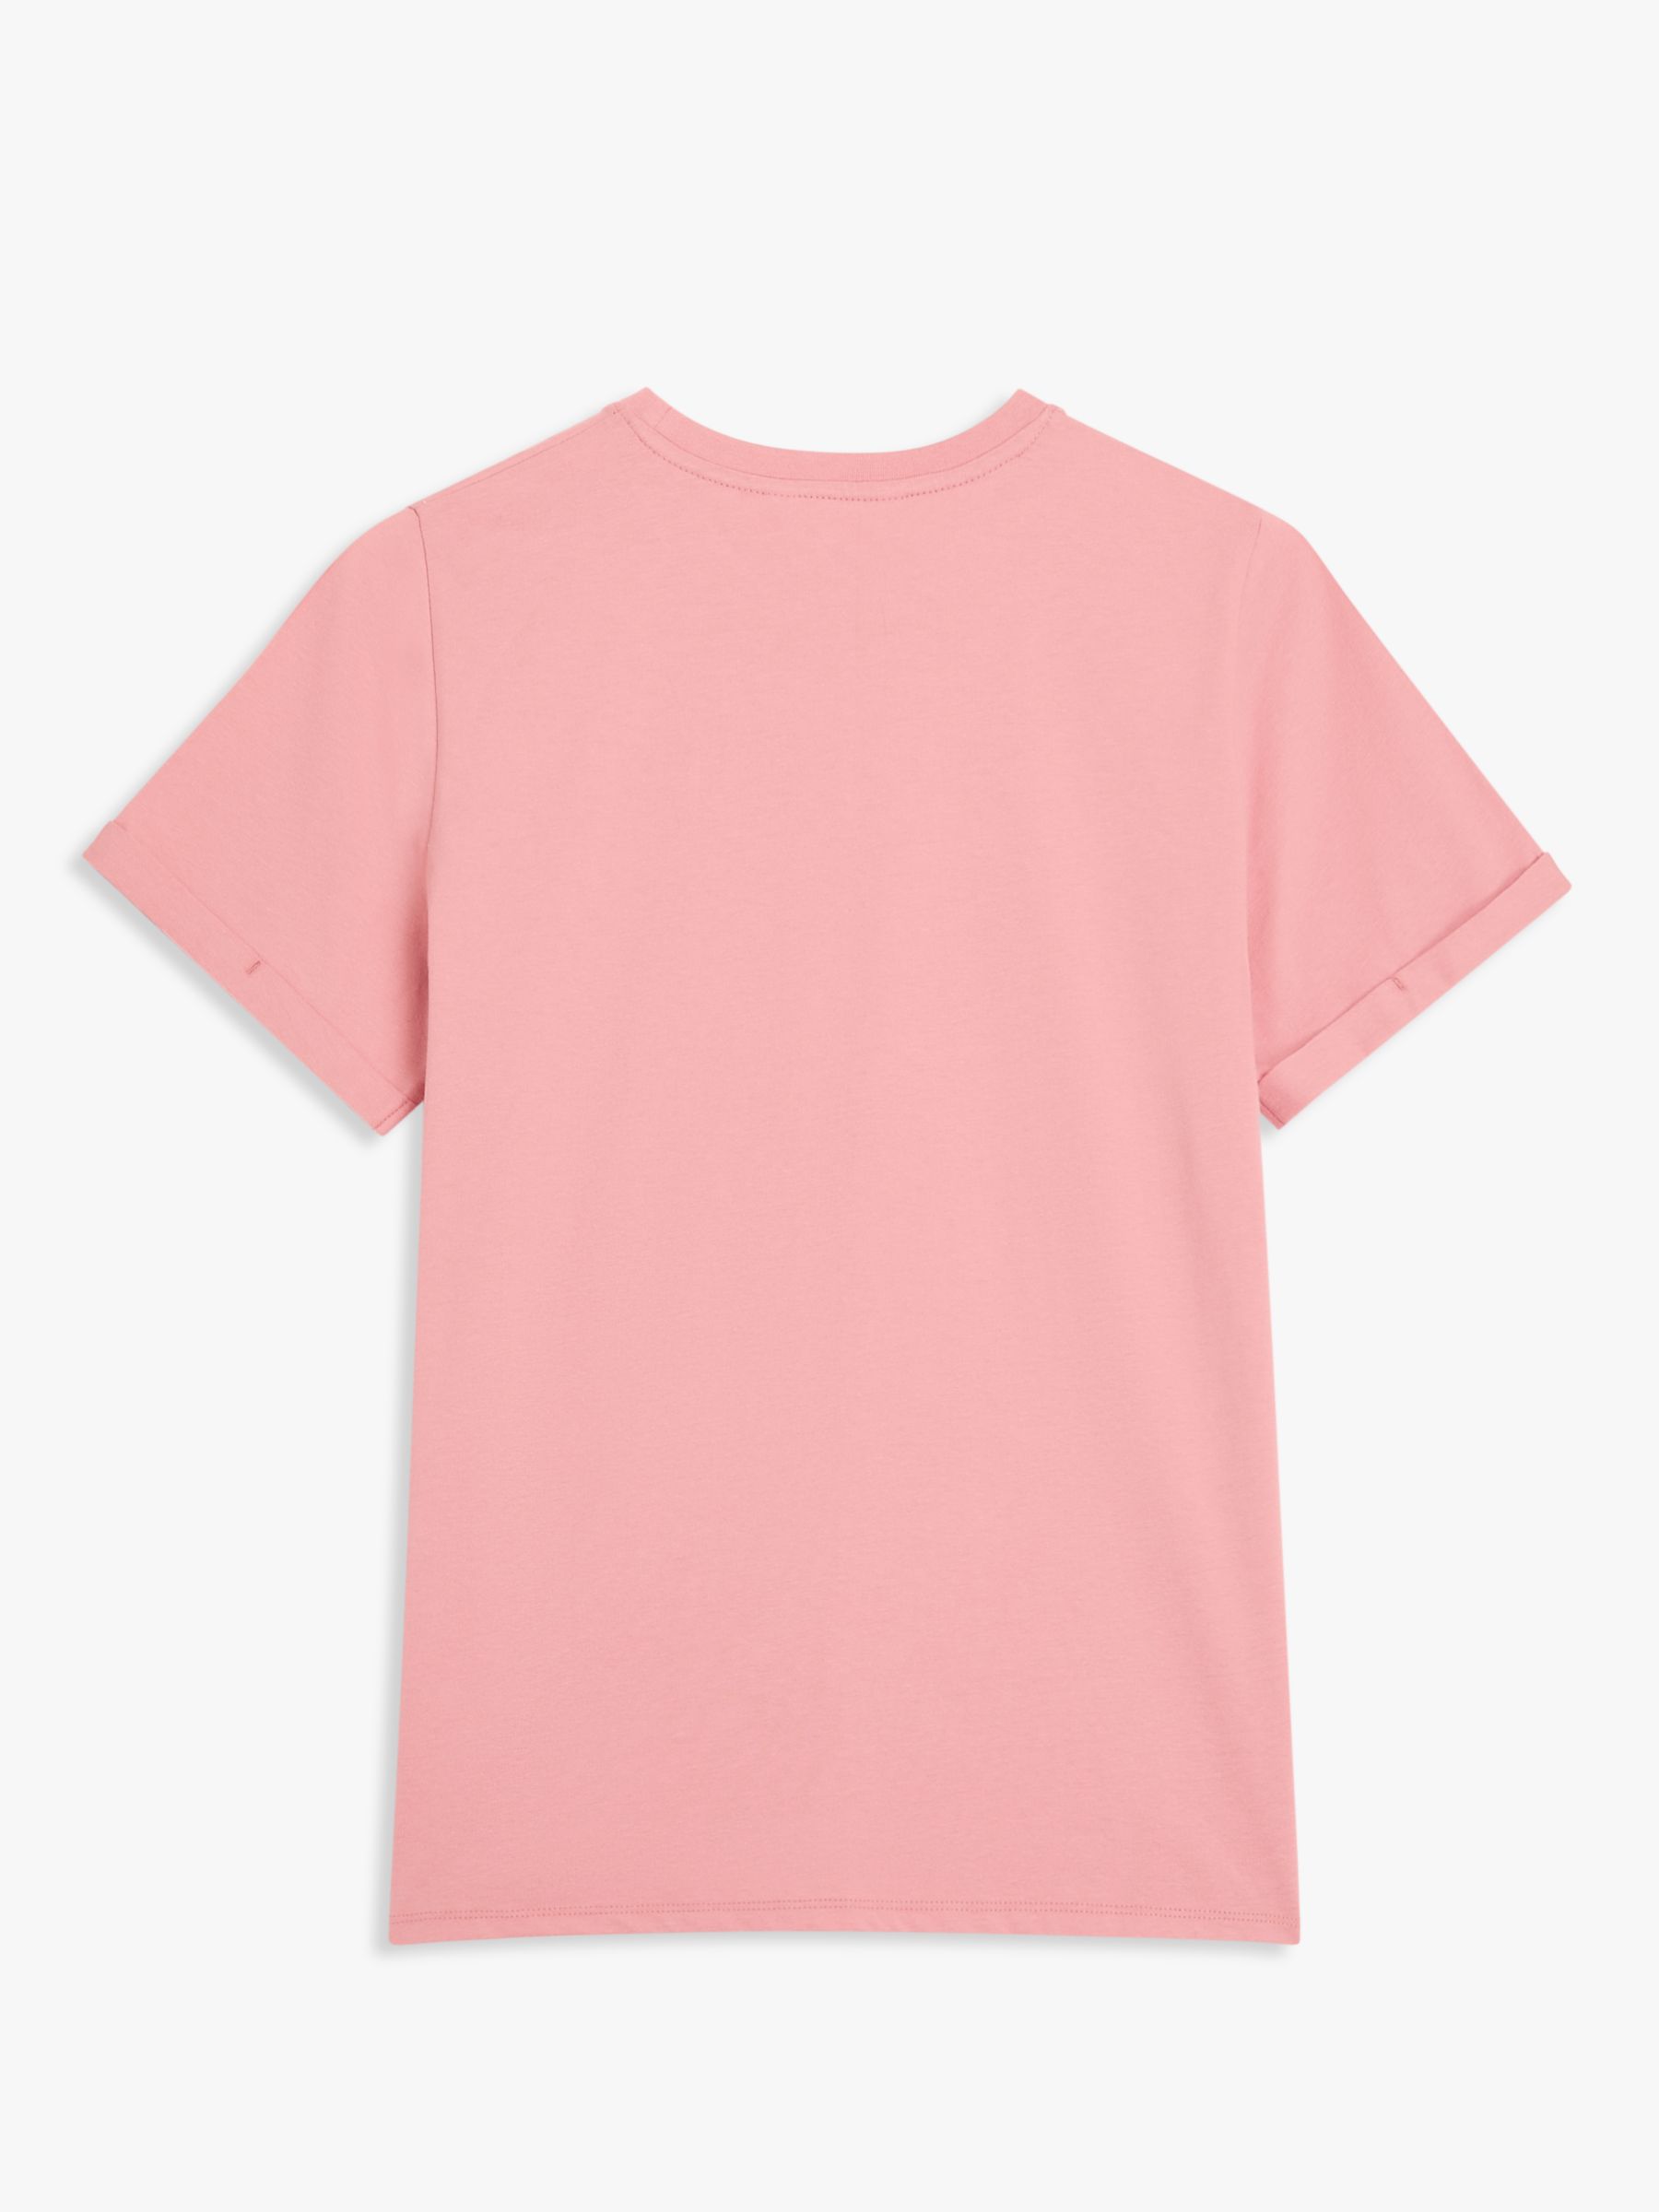 ANYDAY John Lewis & Partners LOVE T-Shirt, Amaranth Blush